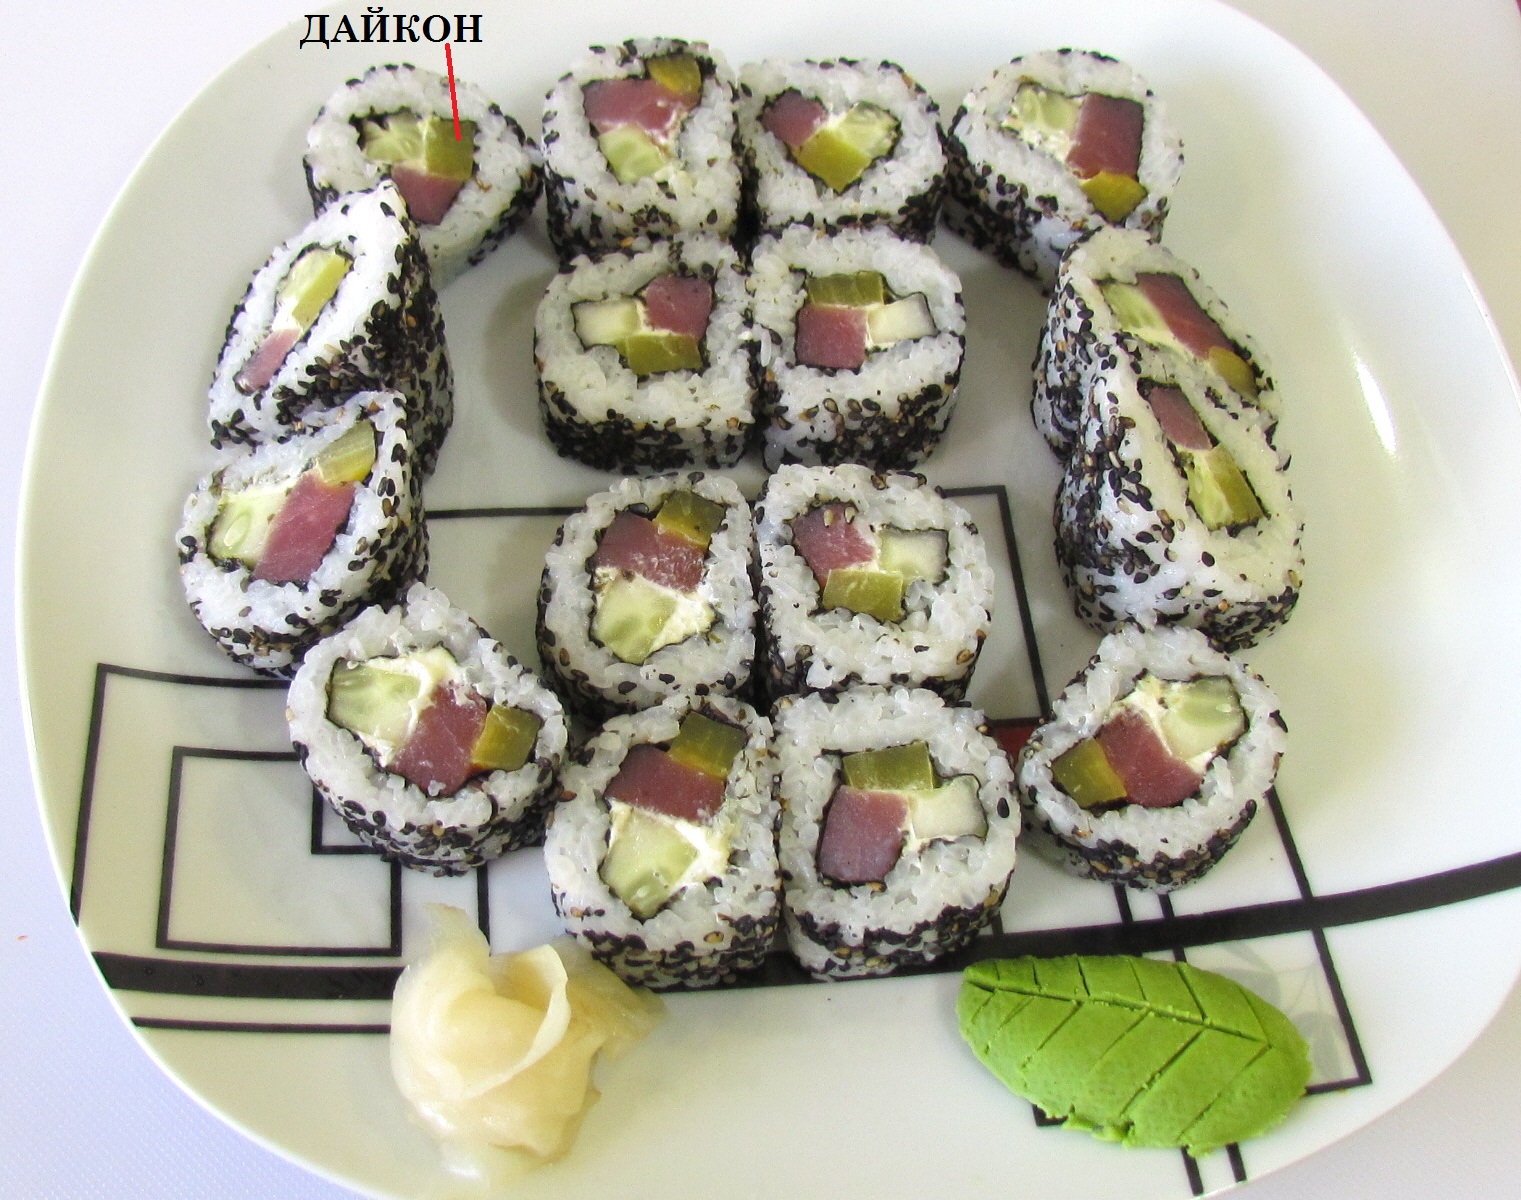 Marynowany daikon do sushi